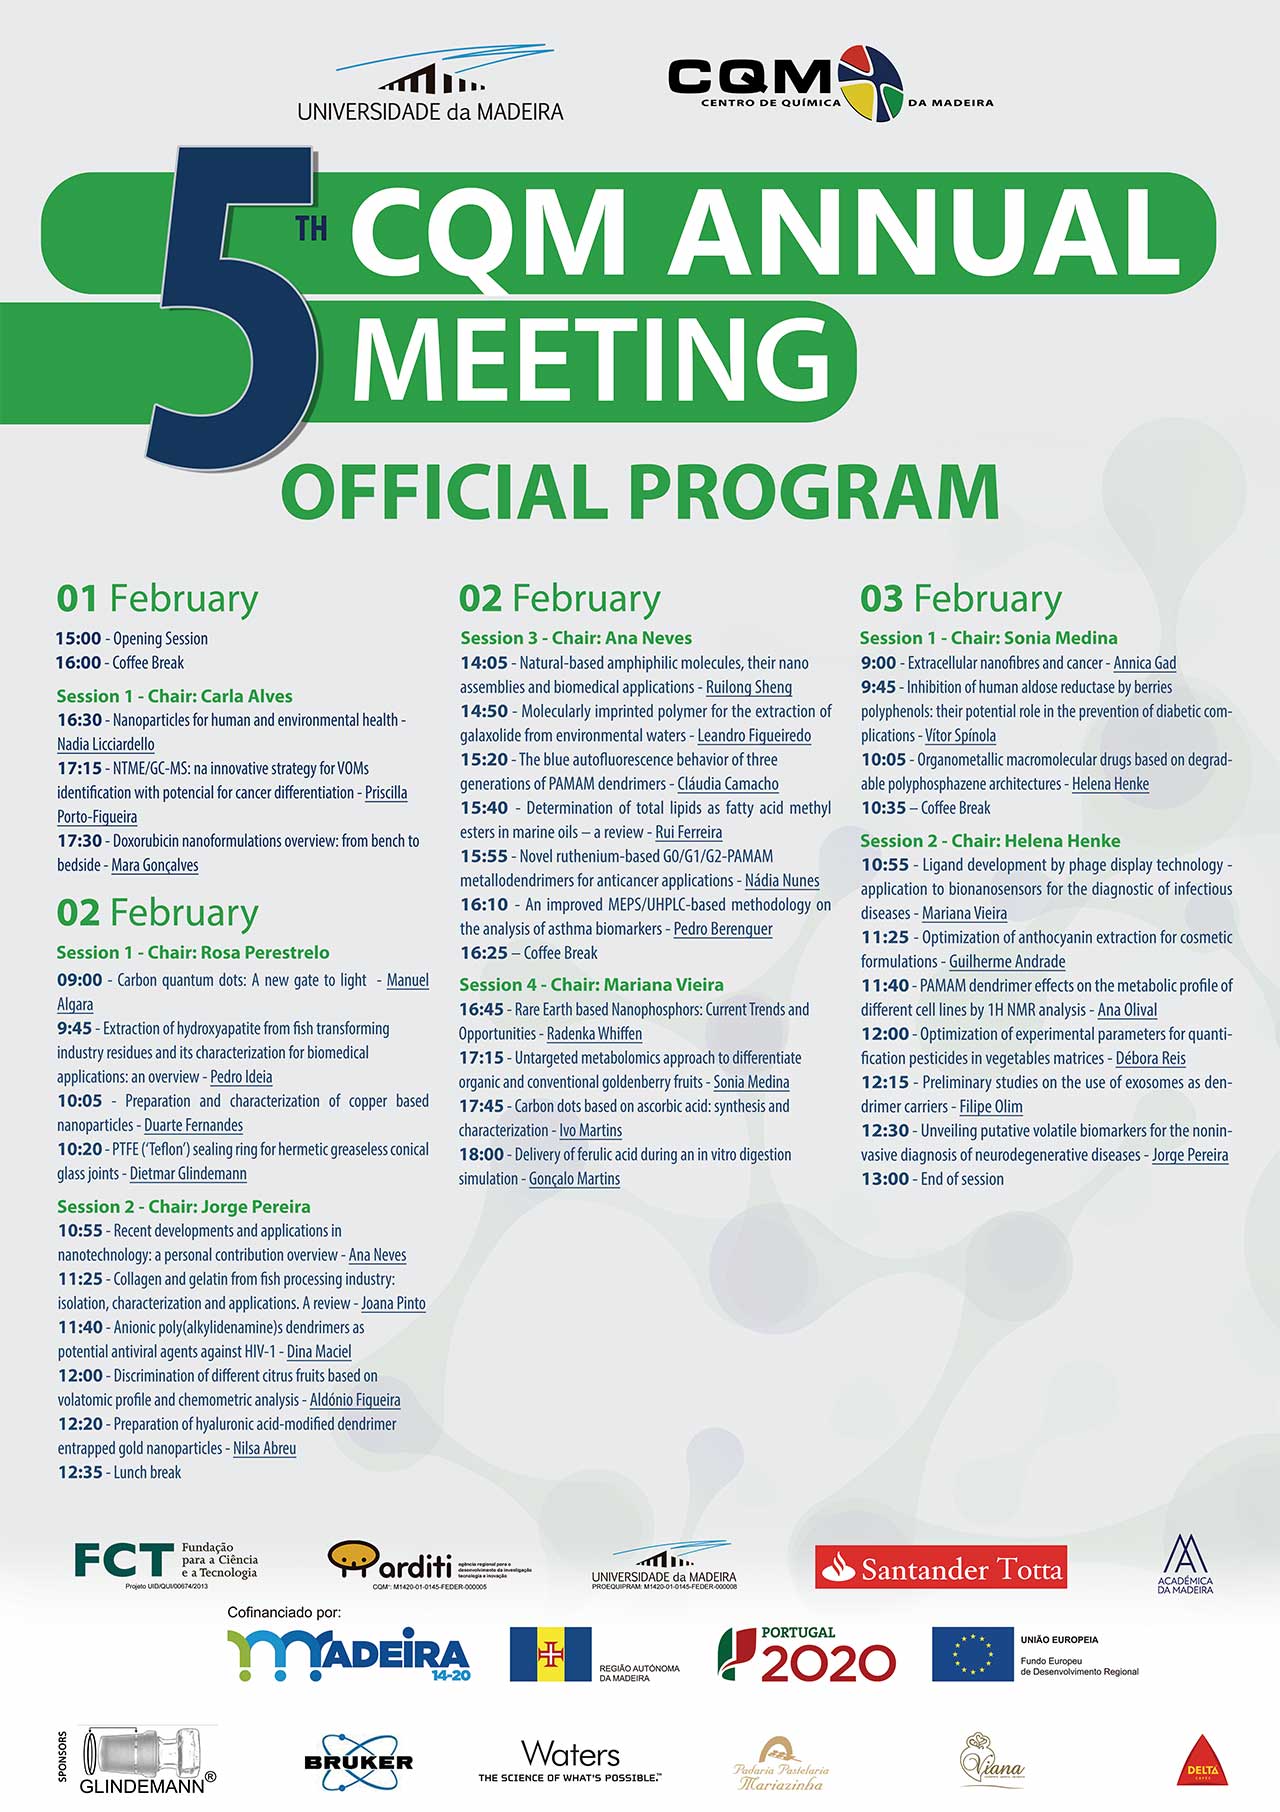 CQM's 5th Annual Meeting program poster.